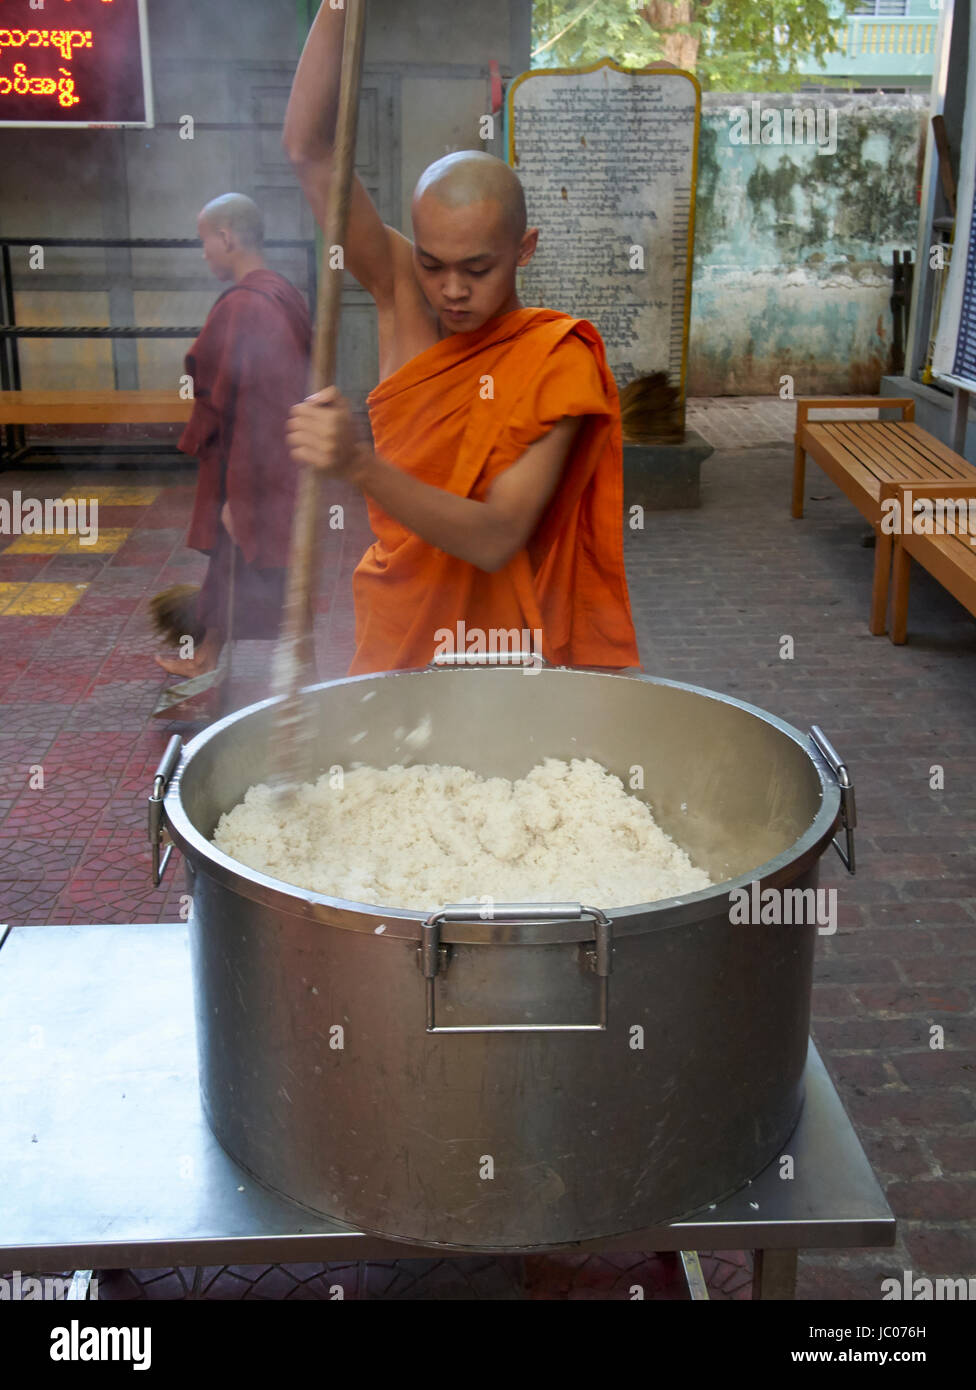 https://c8.alamy.com/comp/JC076H/a-monk-stirring-a-big-pot-of-rice-in-a-monastery-JC076H.jpg